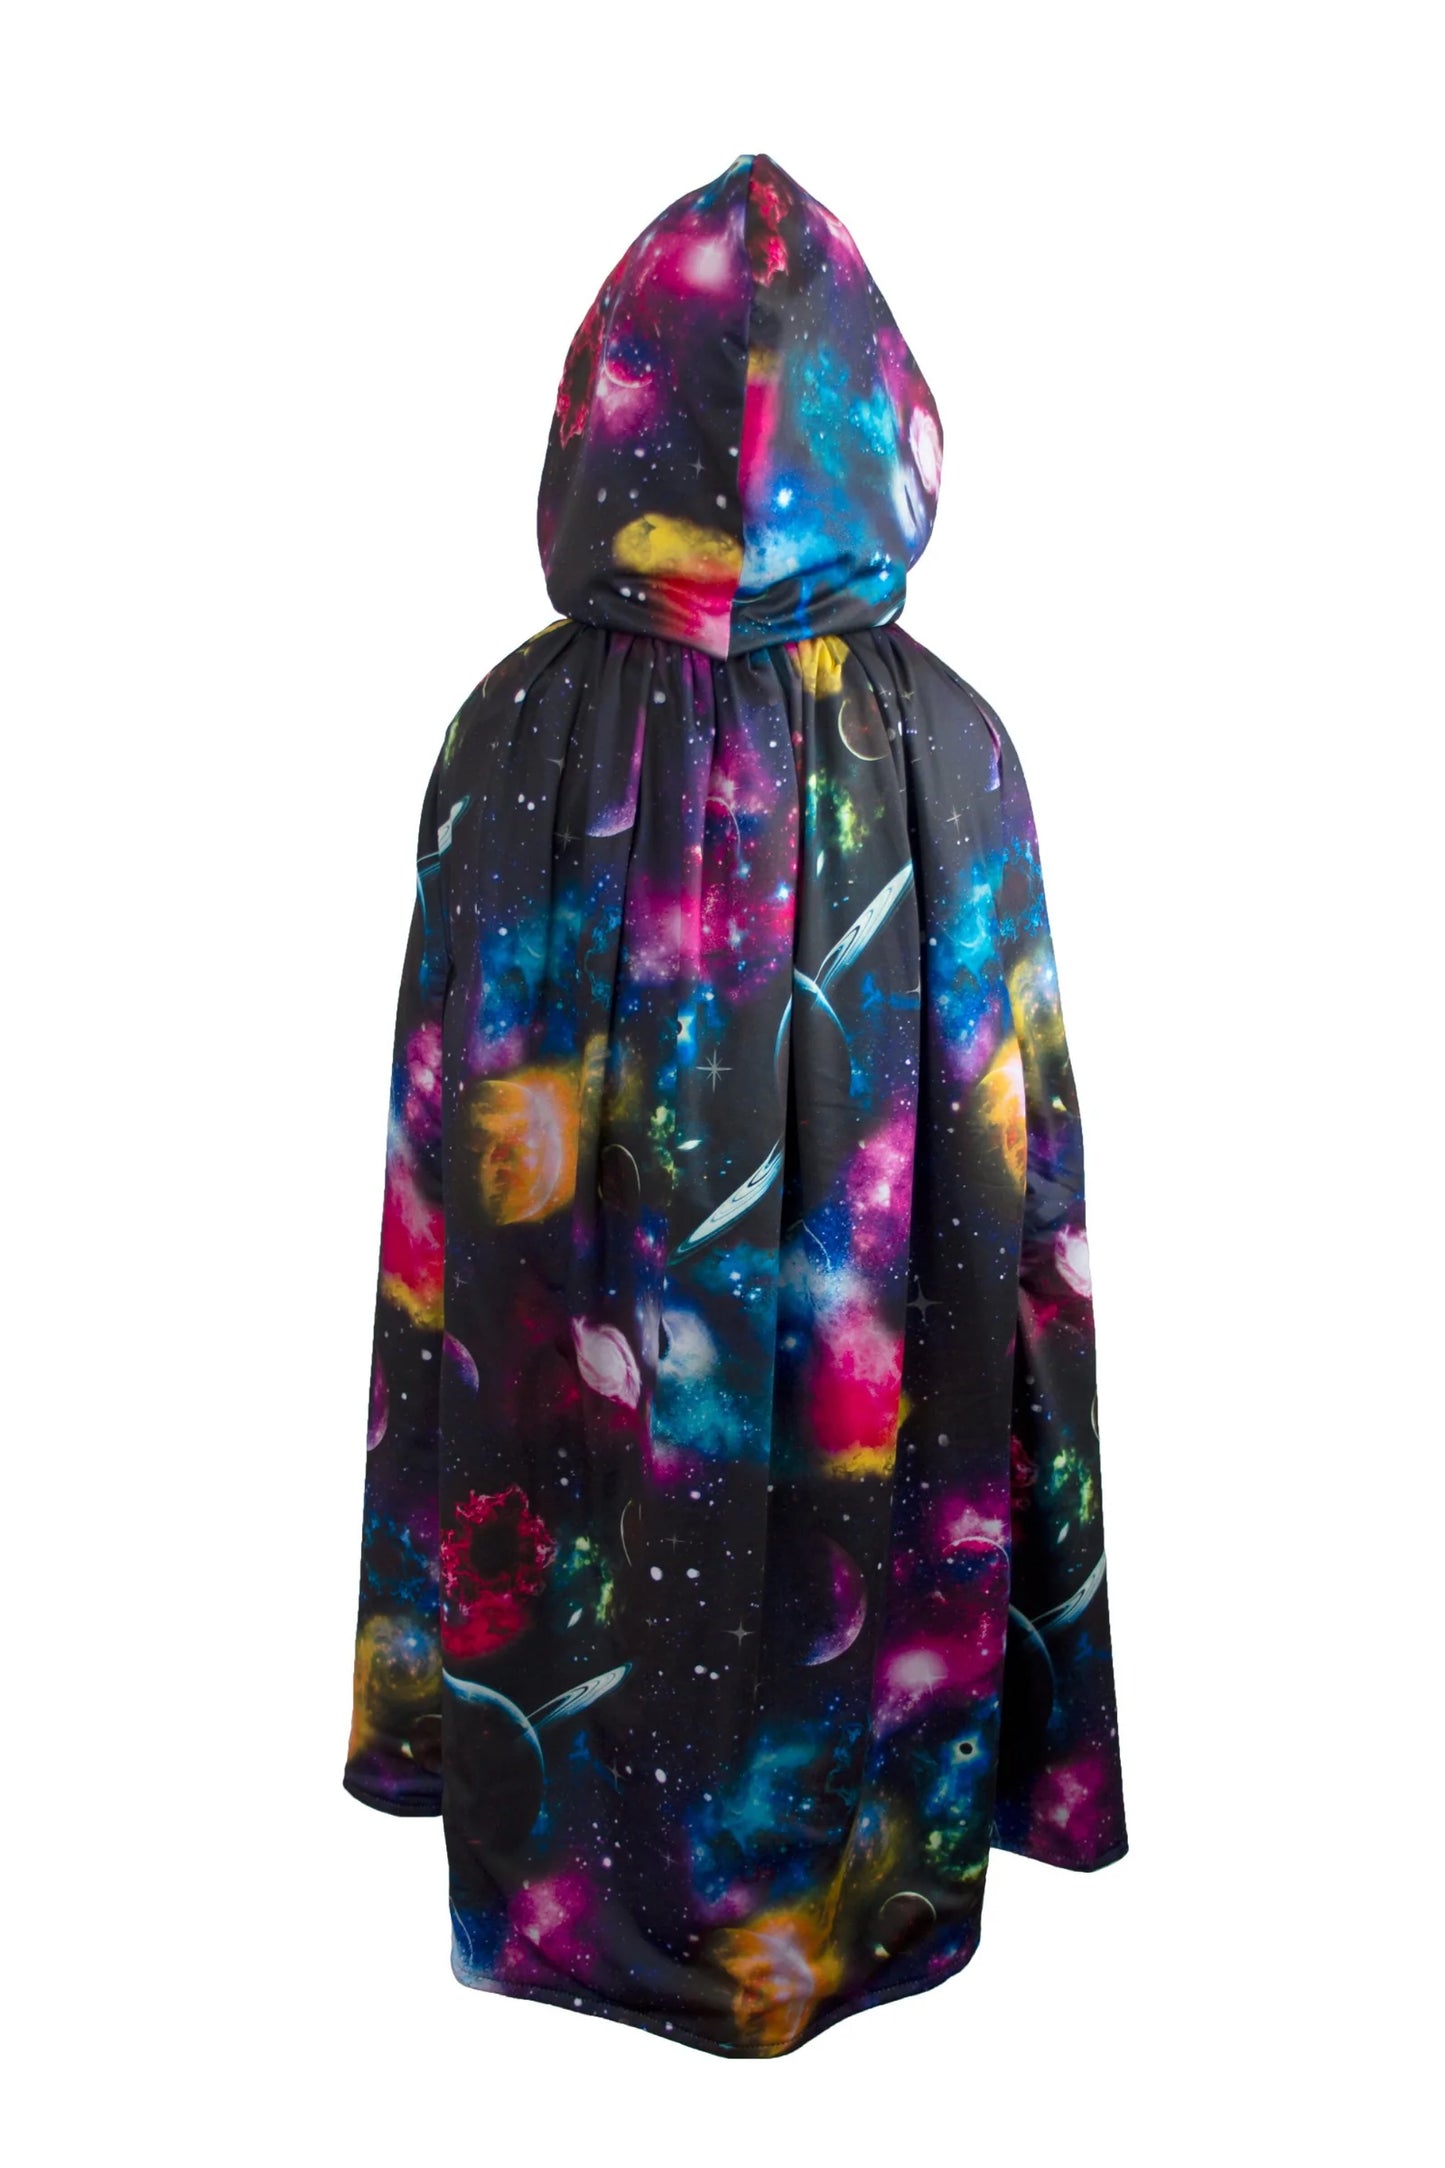 Dress Up - Galaxy Cloak